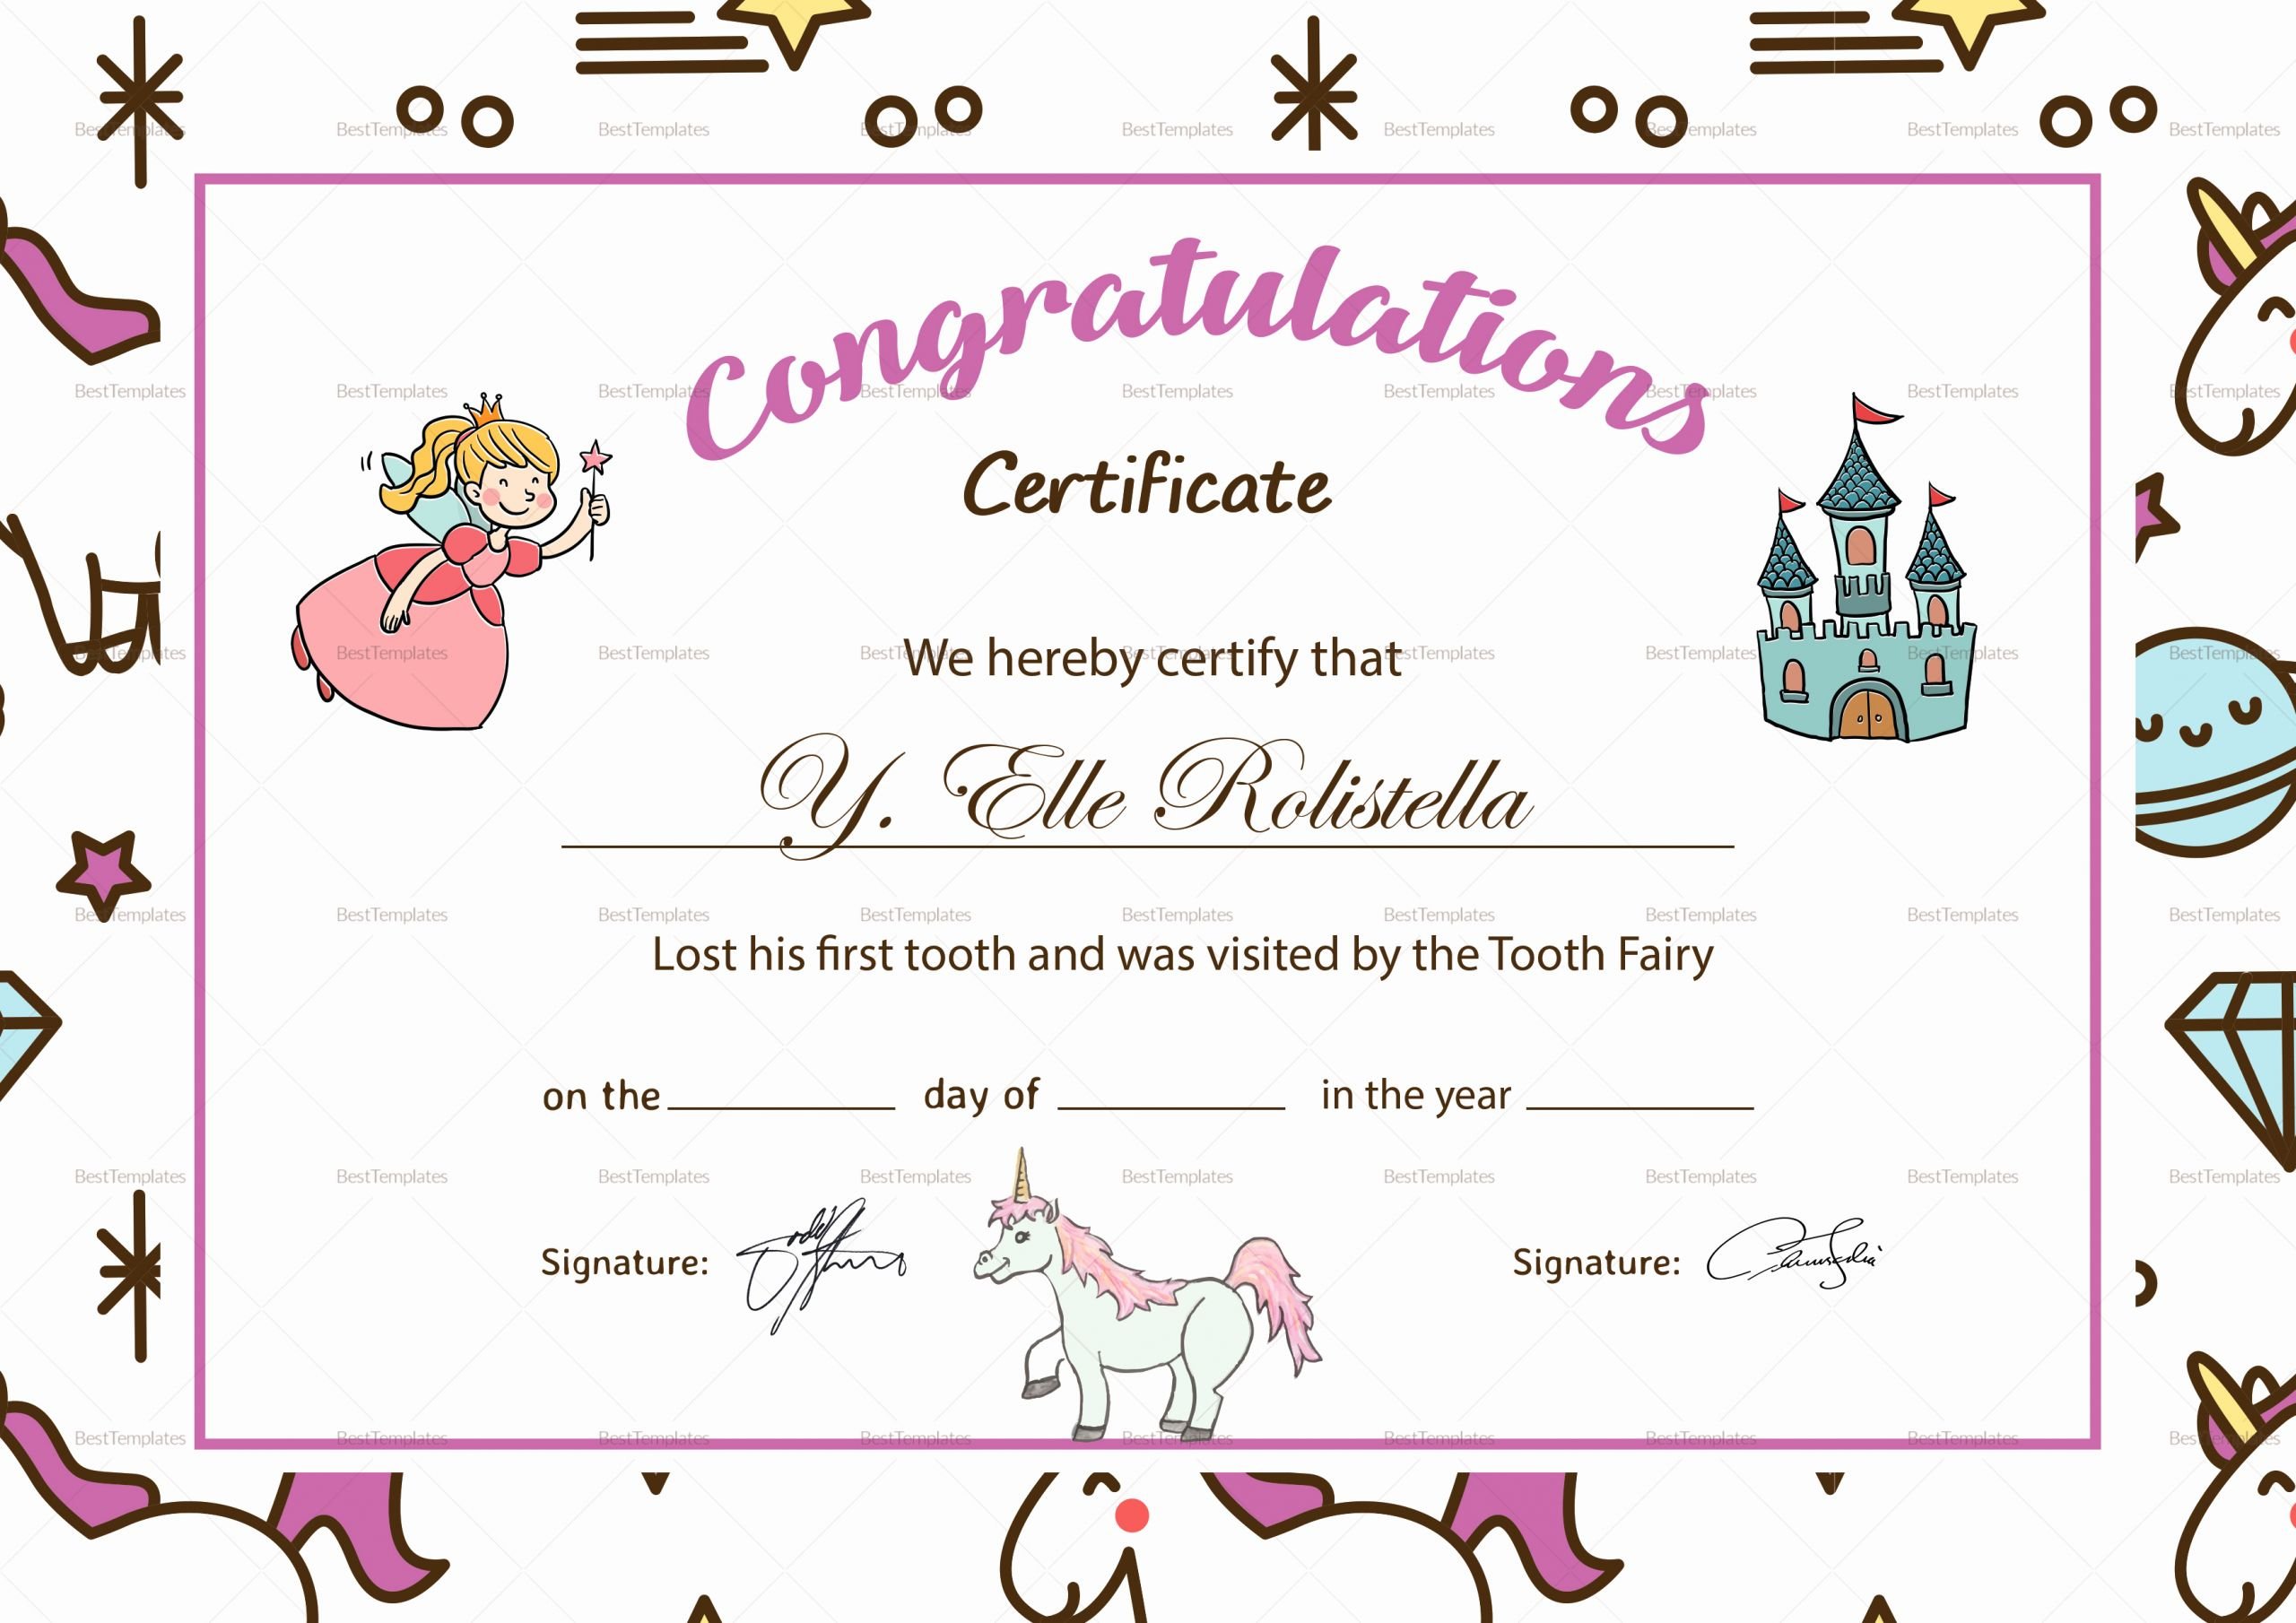 Congratulation Certificate Template Word New tooth Fairy Congratulation Certificate Design Template In